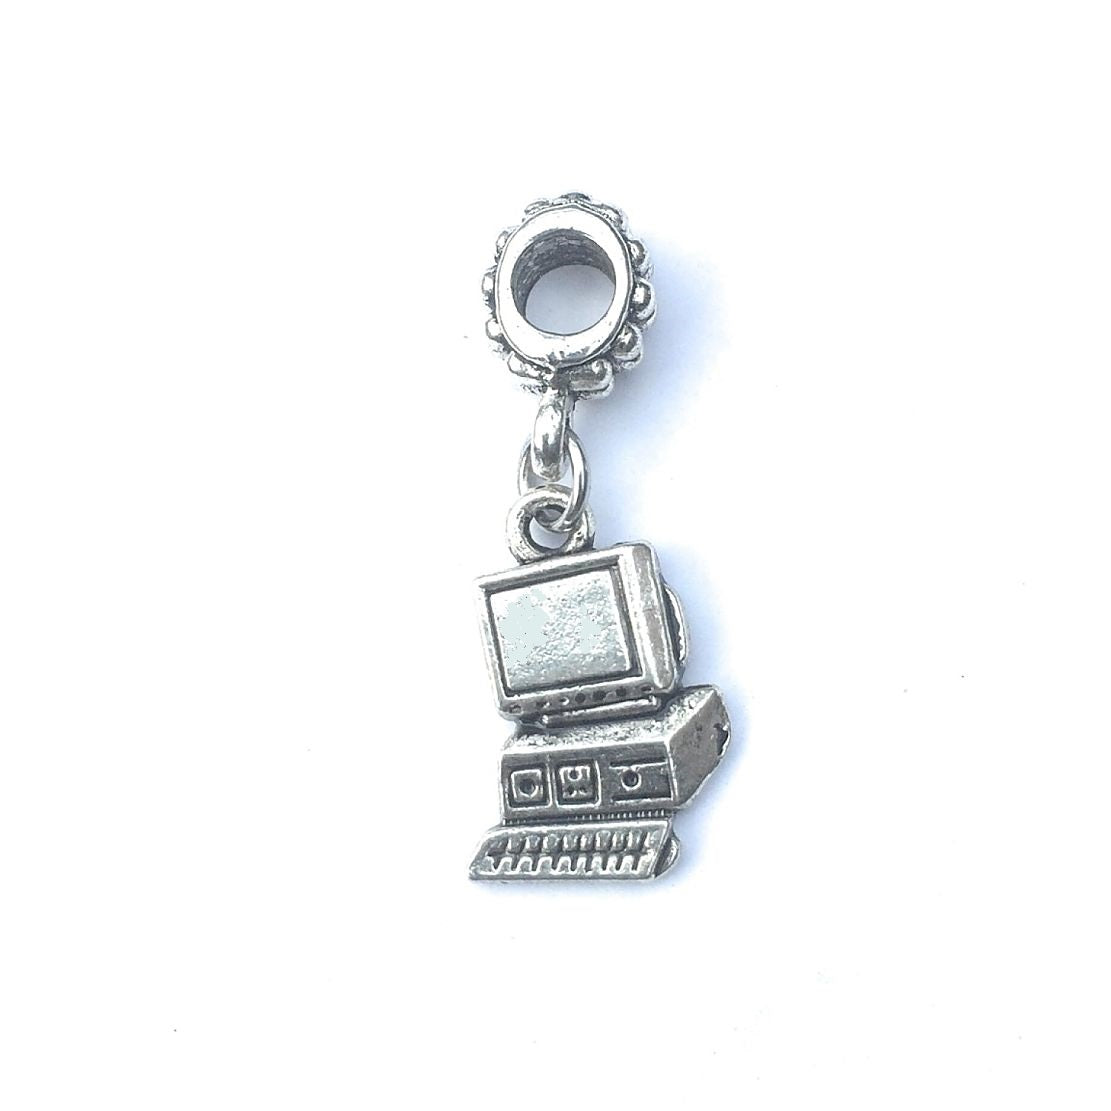 Handcrafted Desk Top Computer Charm Bead for Bracelet.